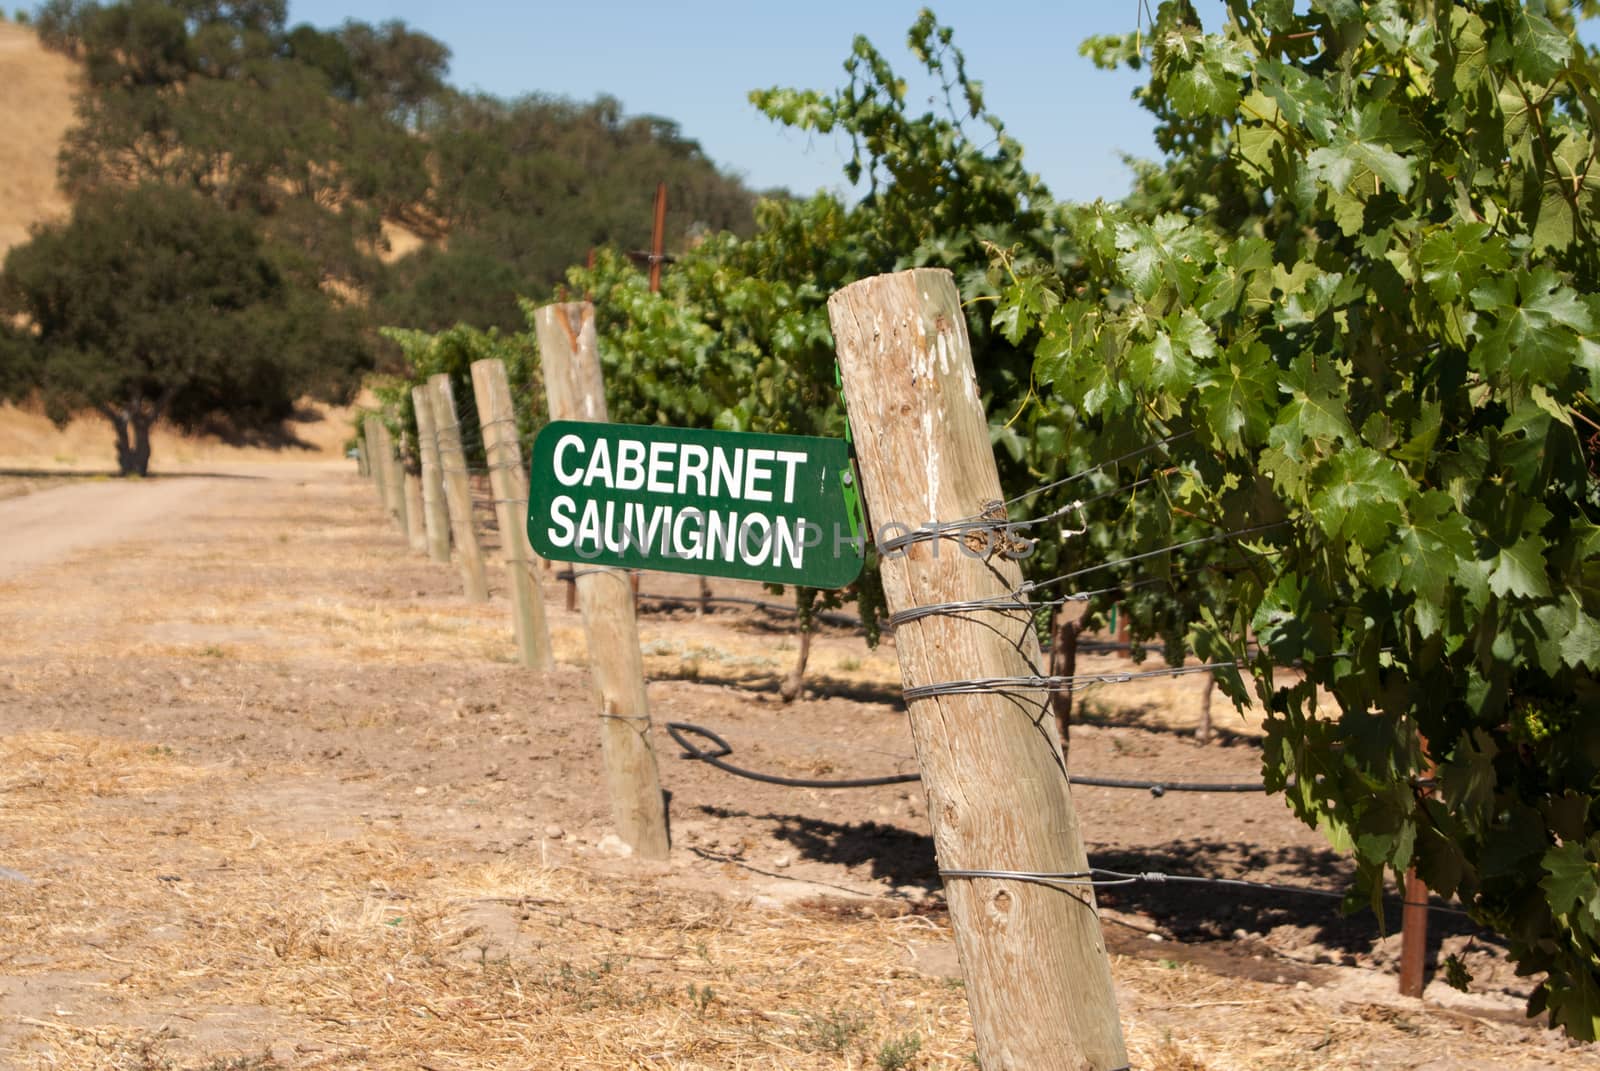 Sign for Cabernet Sauvignon grapes in California wine country